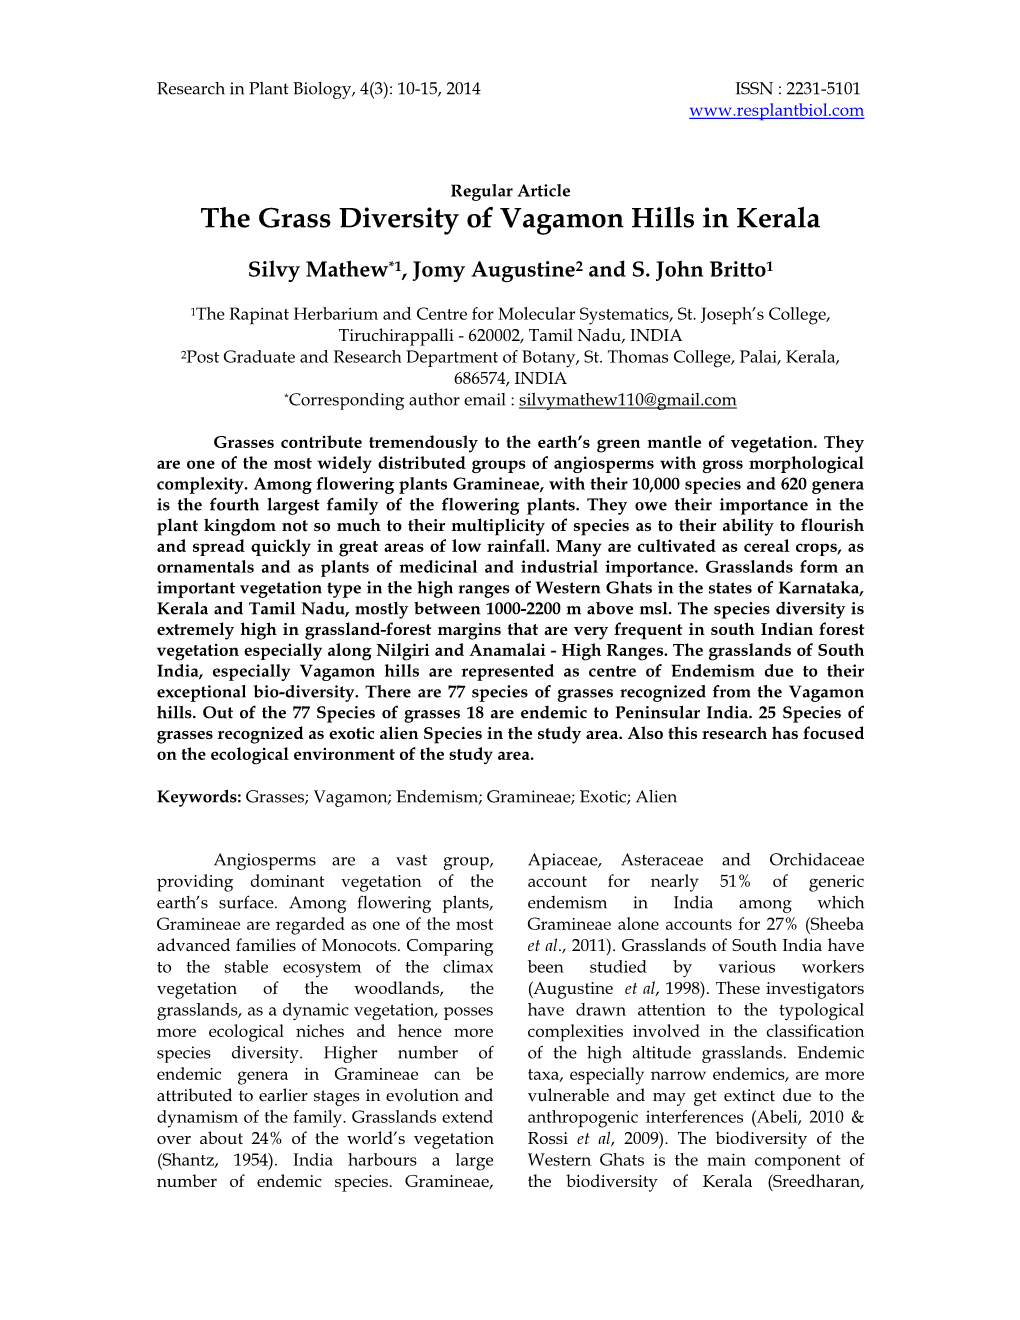 The Grass Diversity of Vagamon Hills in Kerala